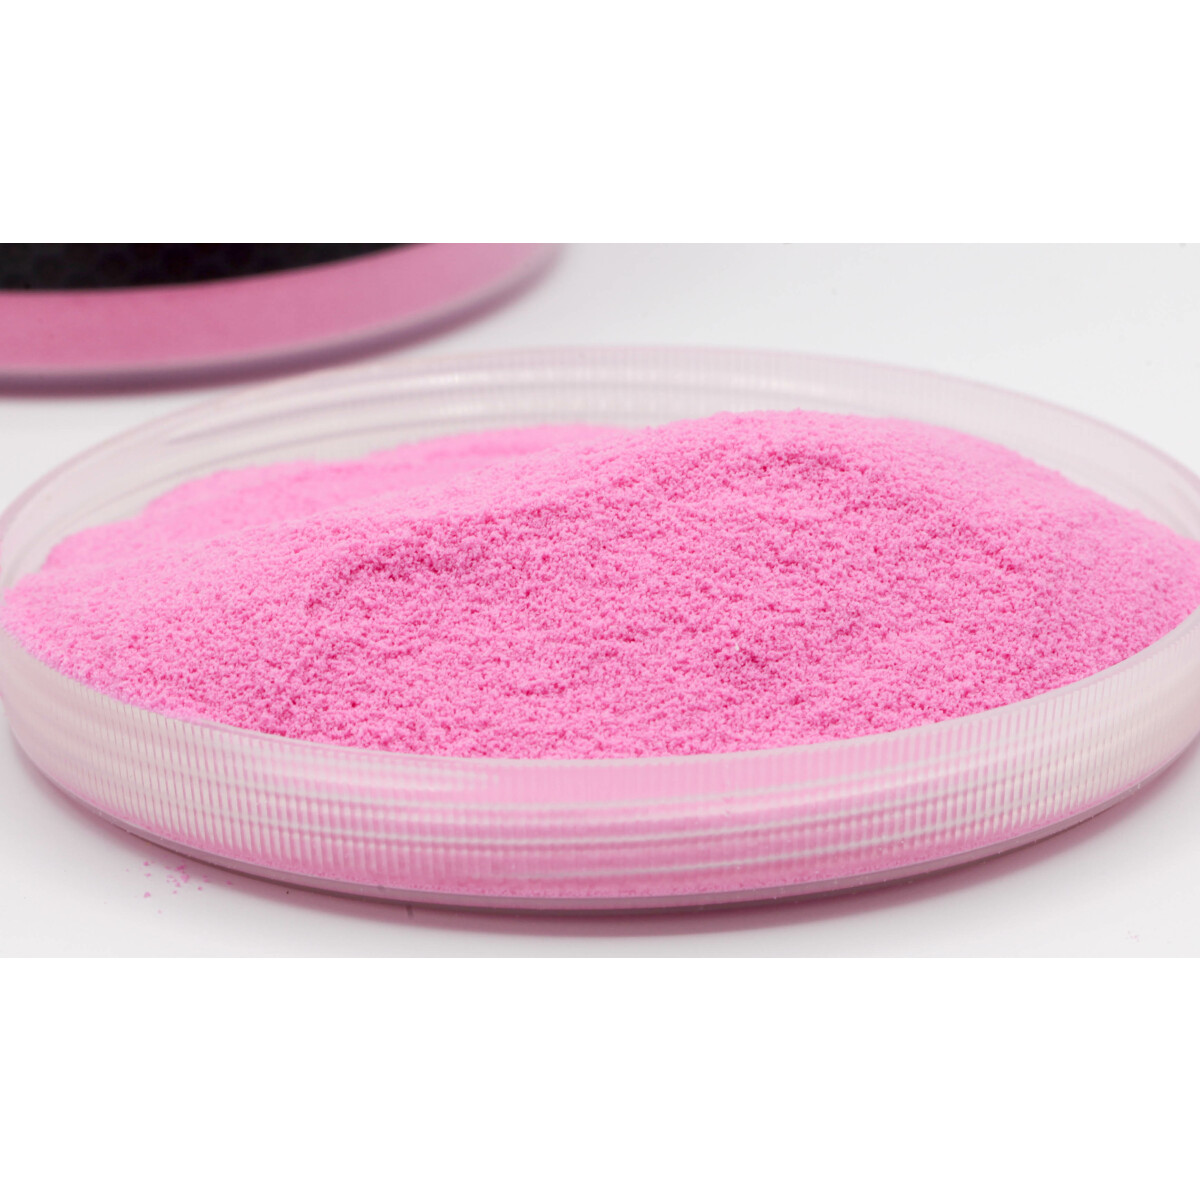 Carpleads Powder Coating - Pink 200 g